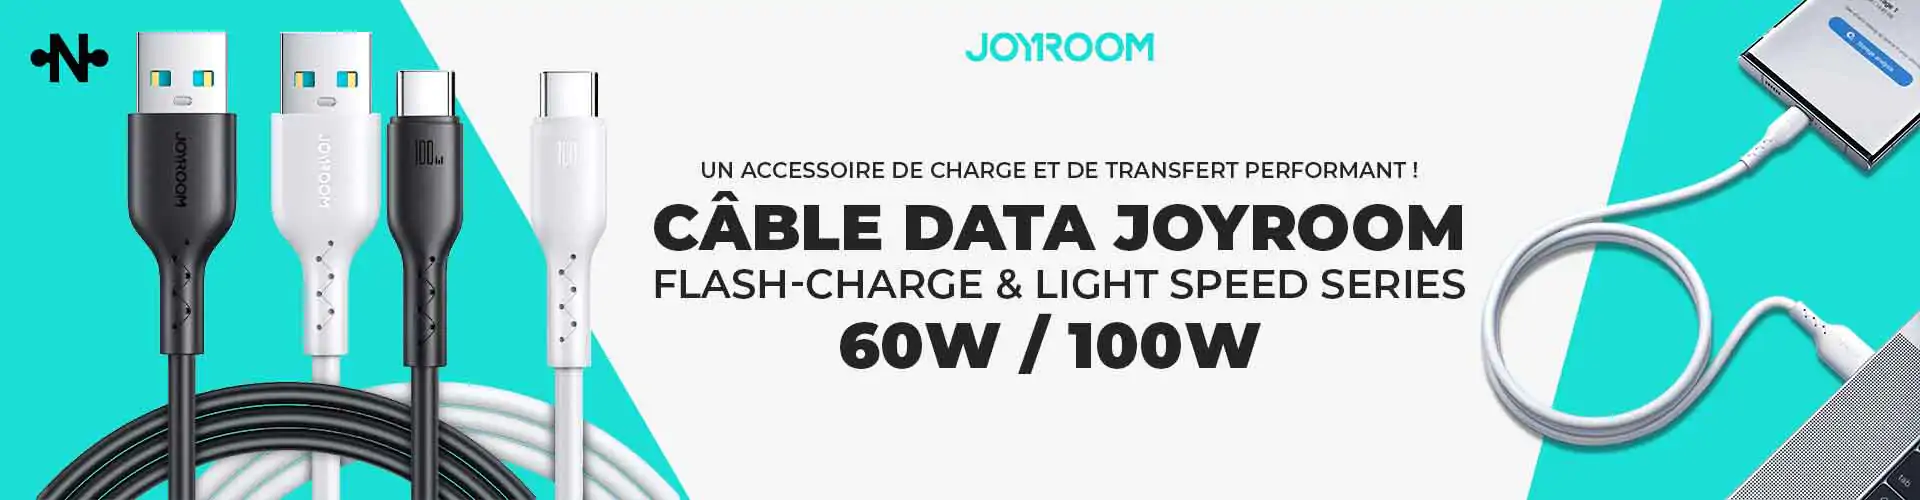 Câble Data JOYROOM
Flash-Charge & Light speed Series
60W / 100W